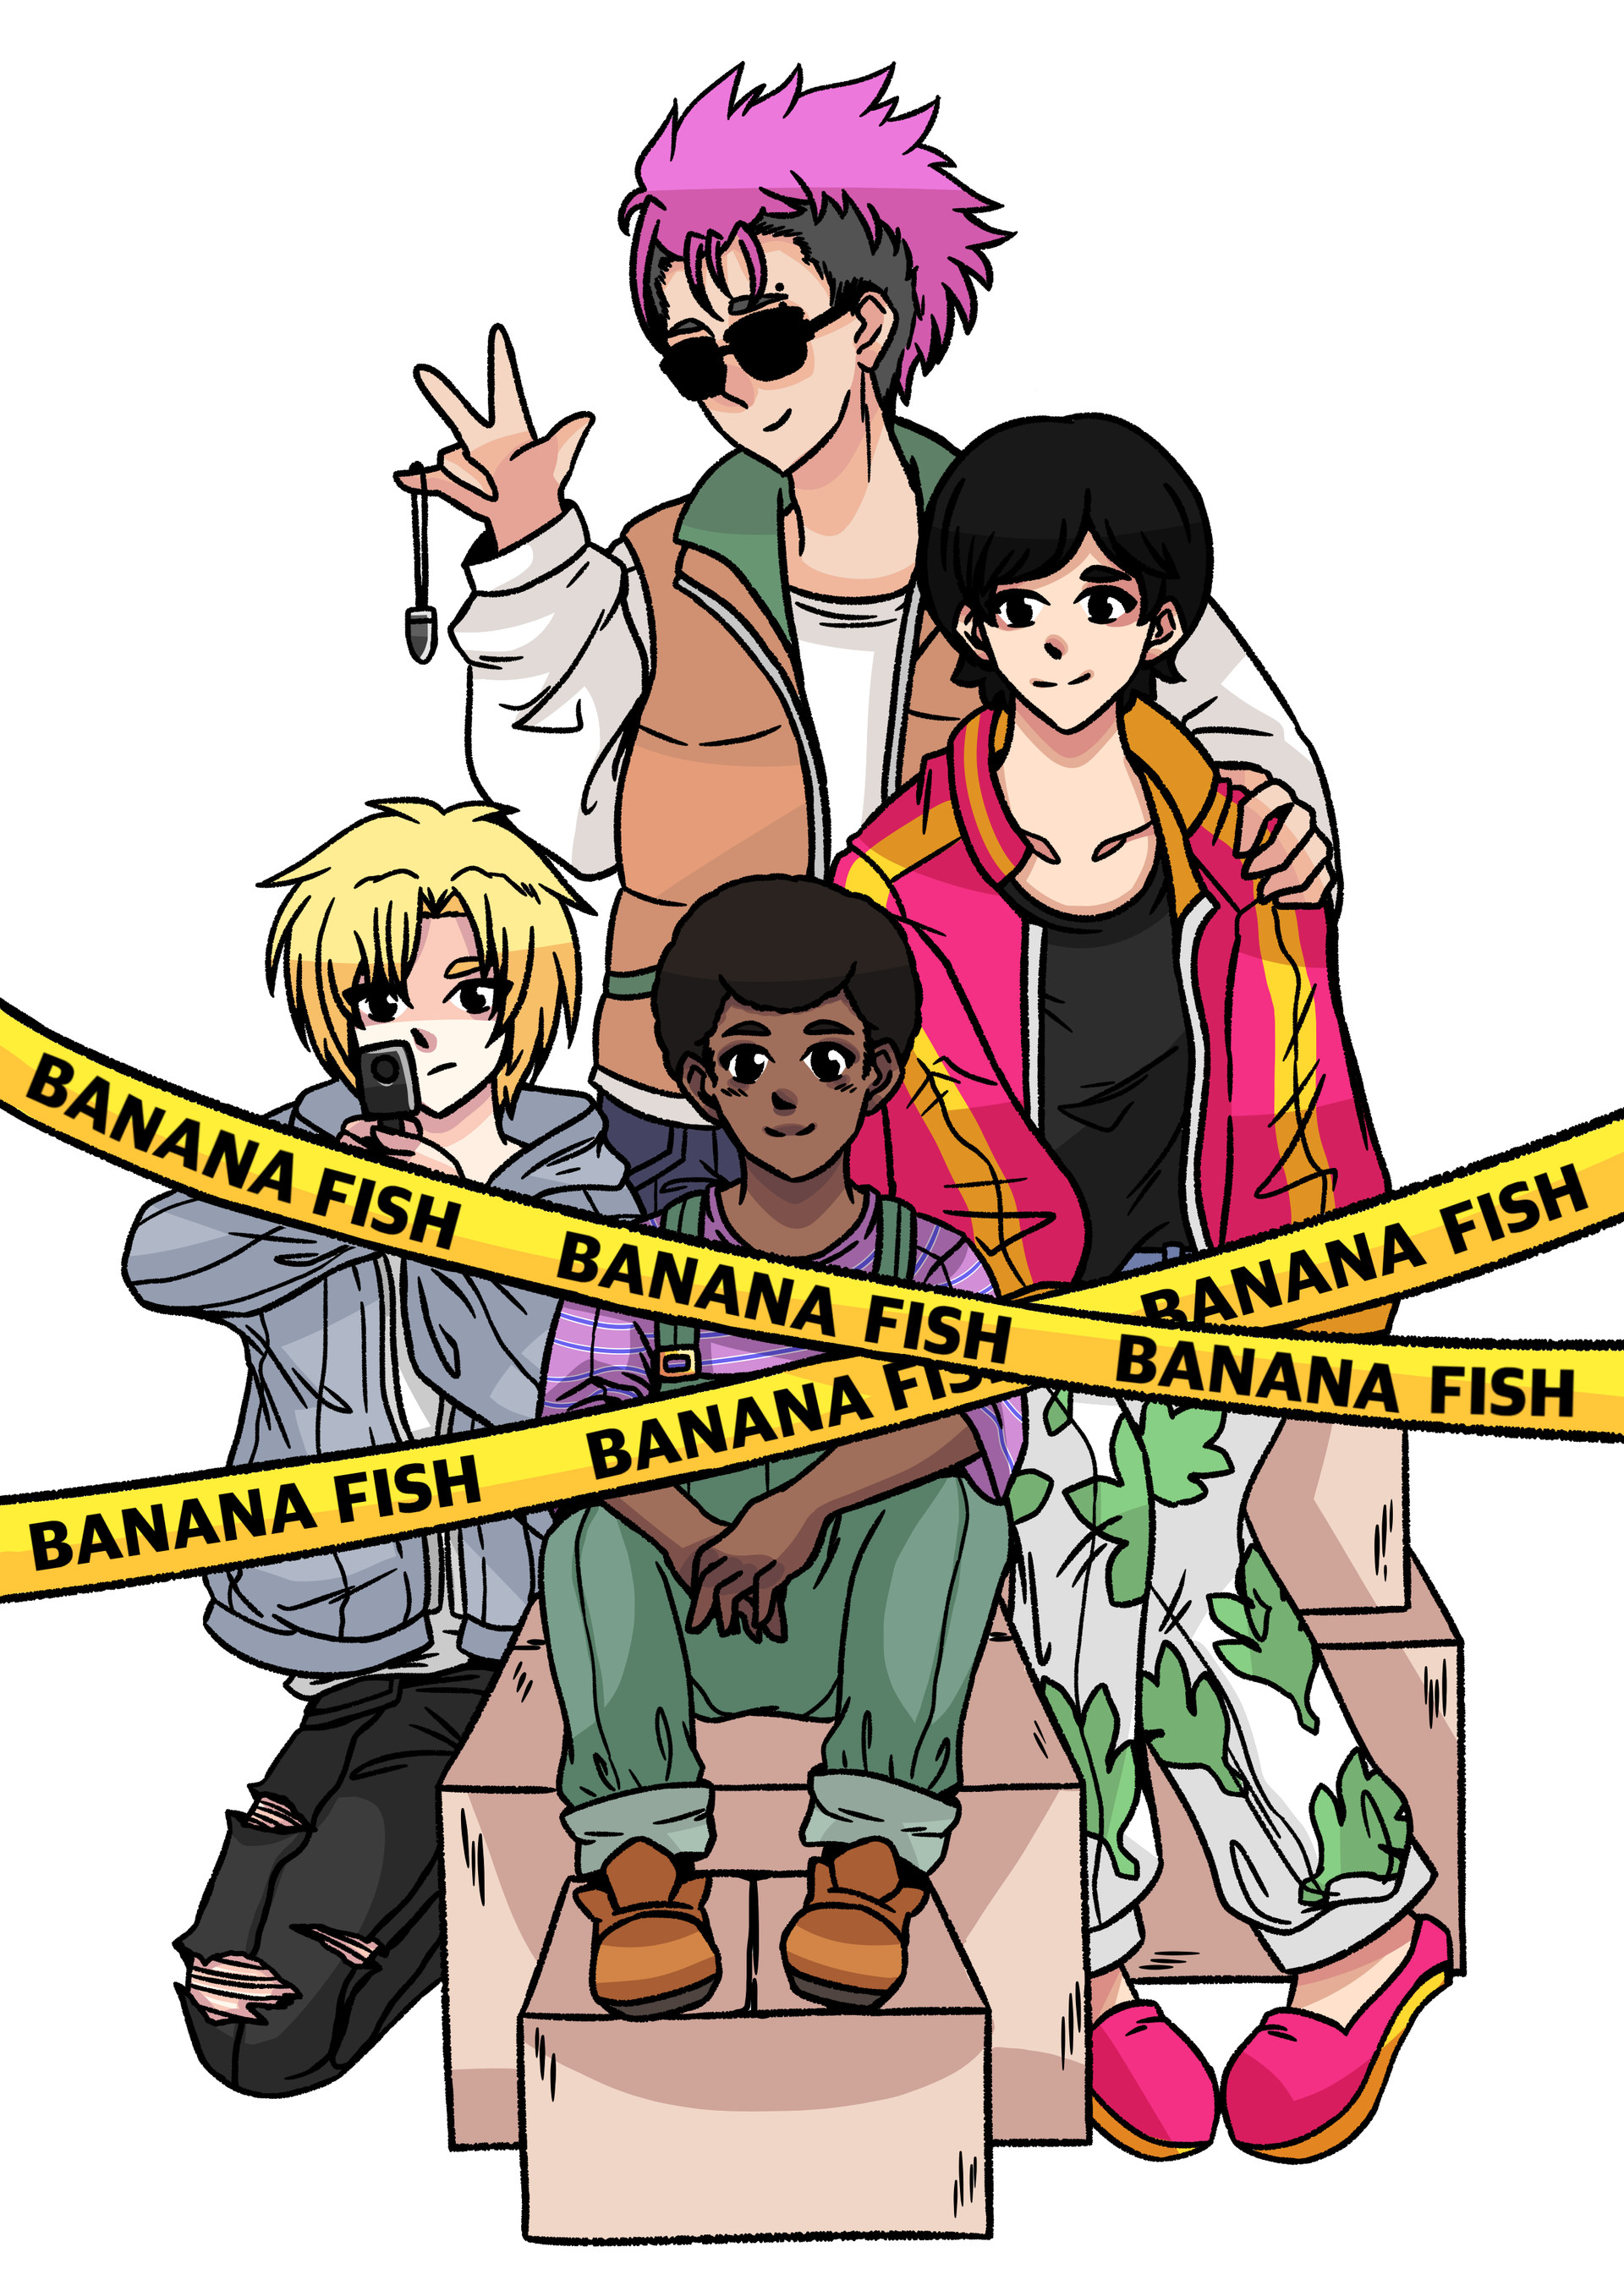 ArtStation - anime fan art banana fish